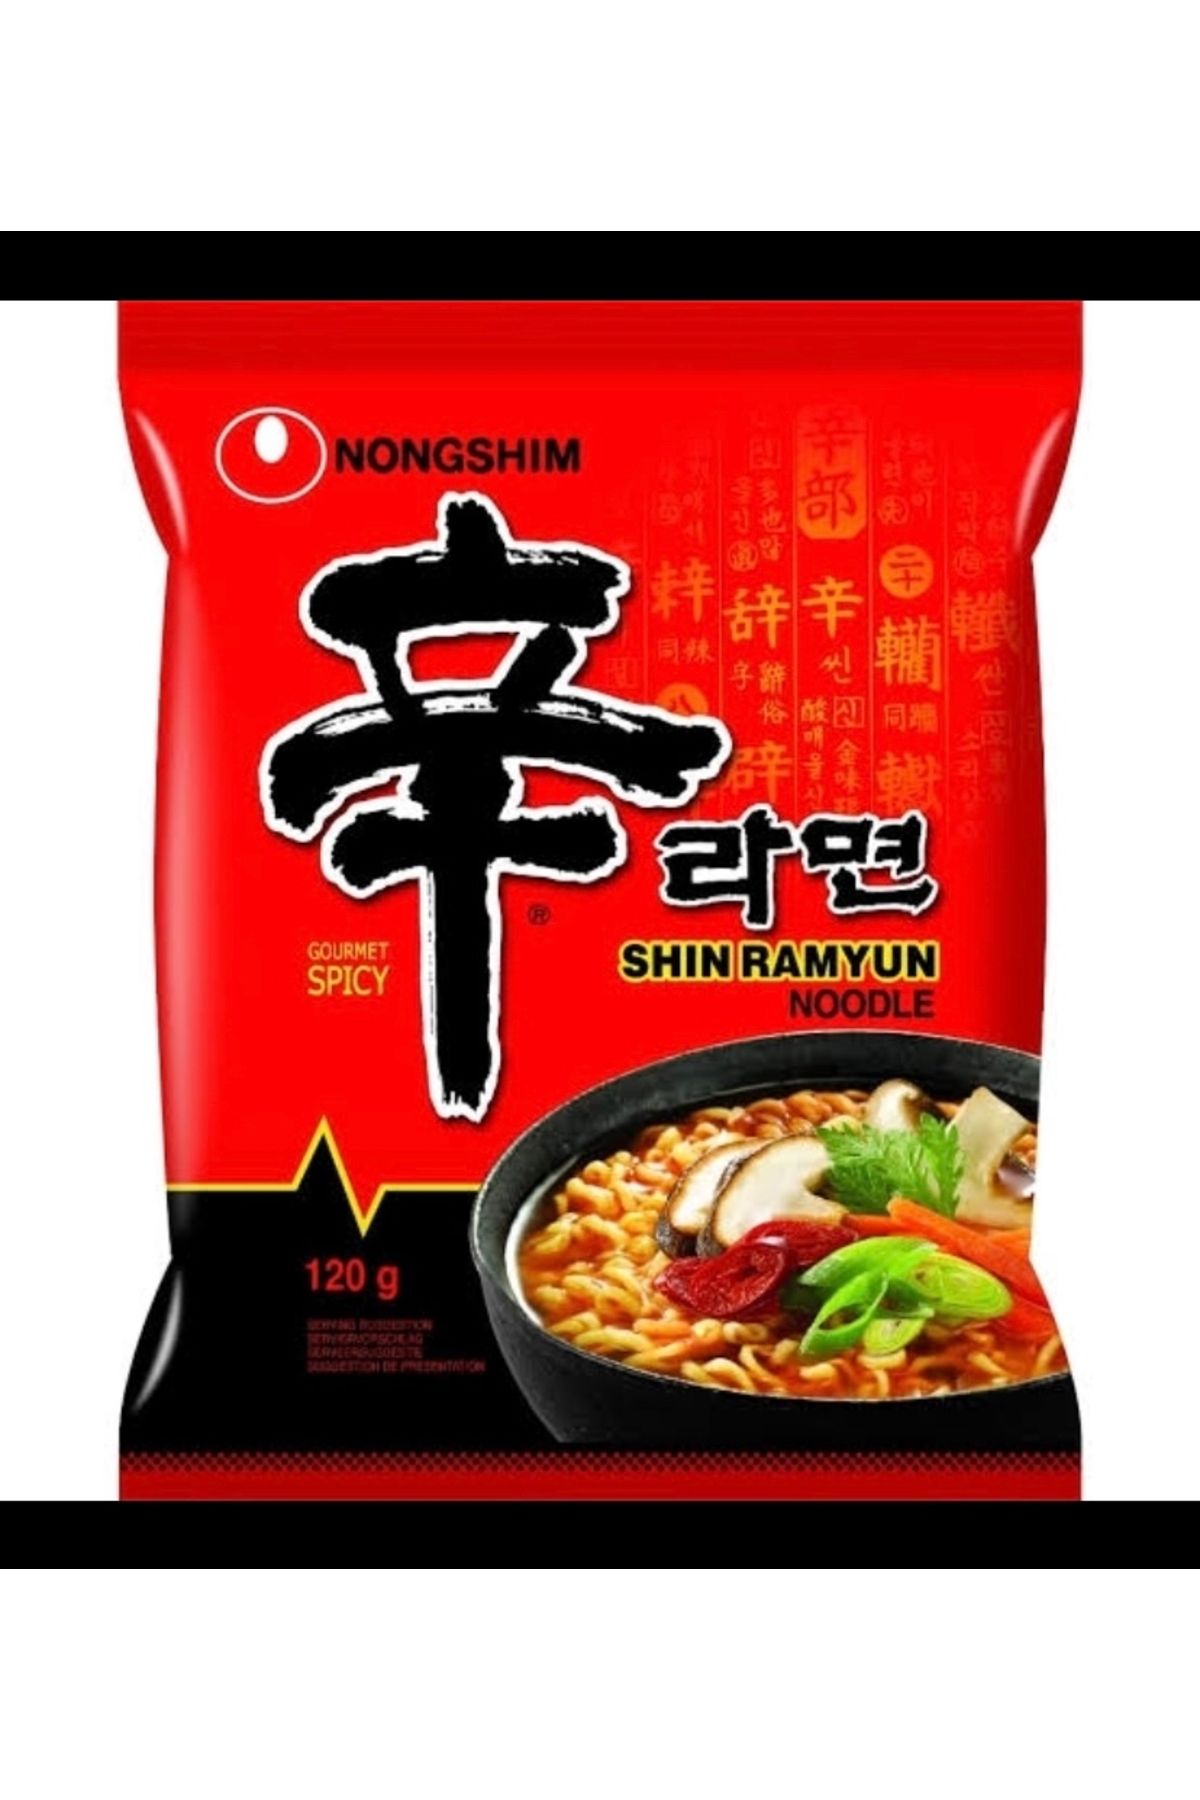 buldak Nongshim Shin Ramyun Noodle Soup 120g helal